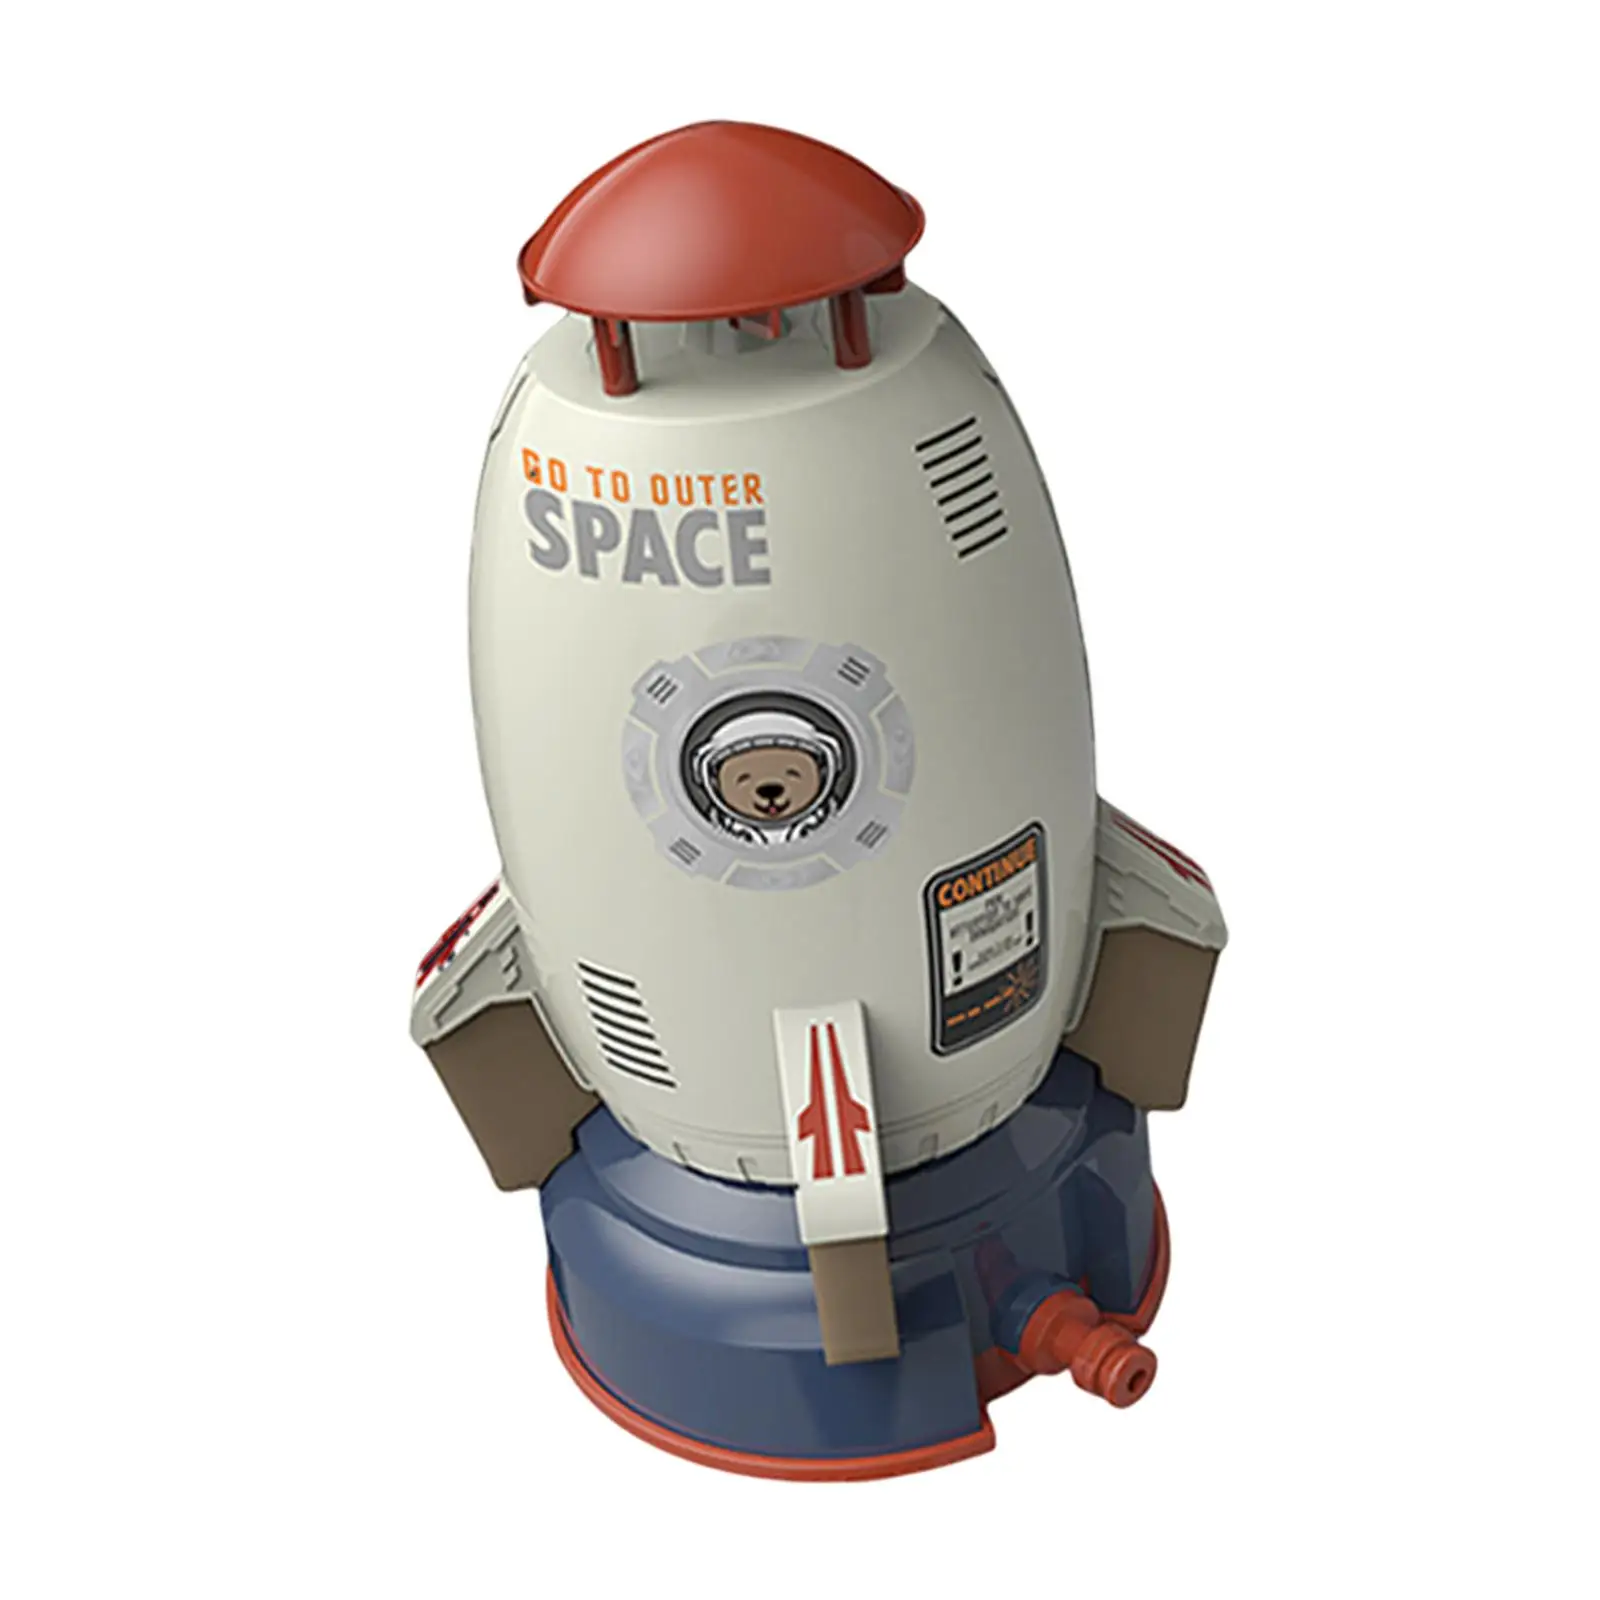 Outdoor Rocket Water Pressure Lift Sprinkler Toy Space Rocket Shape for Boys